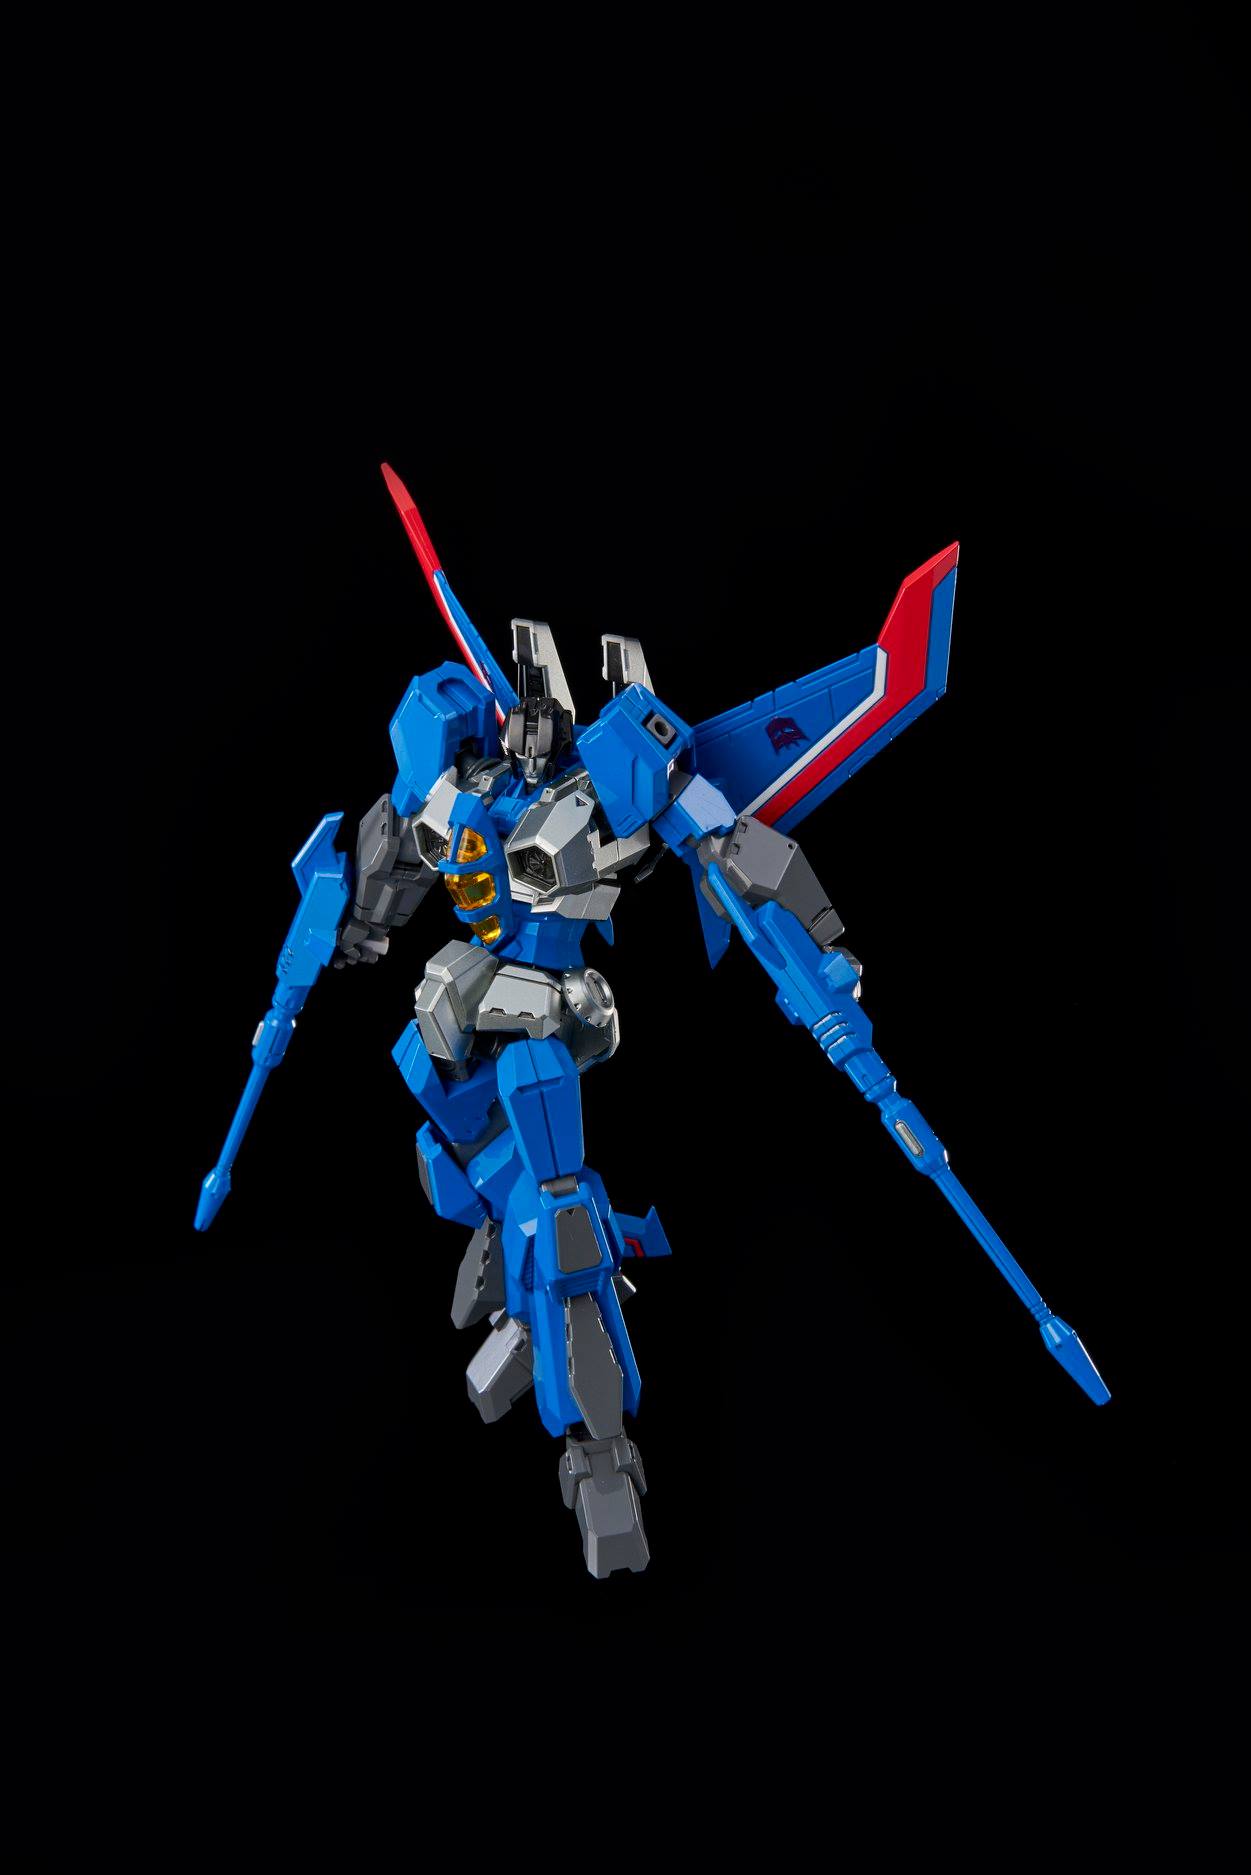 Furai Model Transformers Thunder Cracker